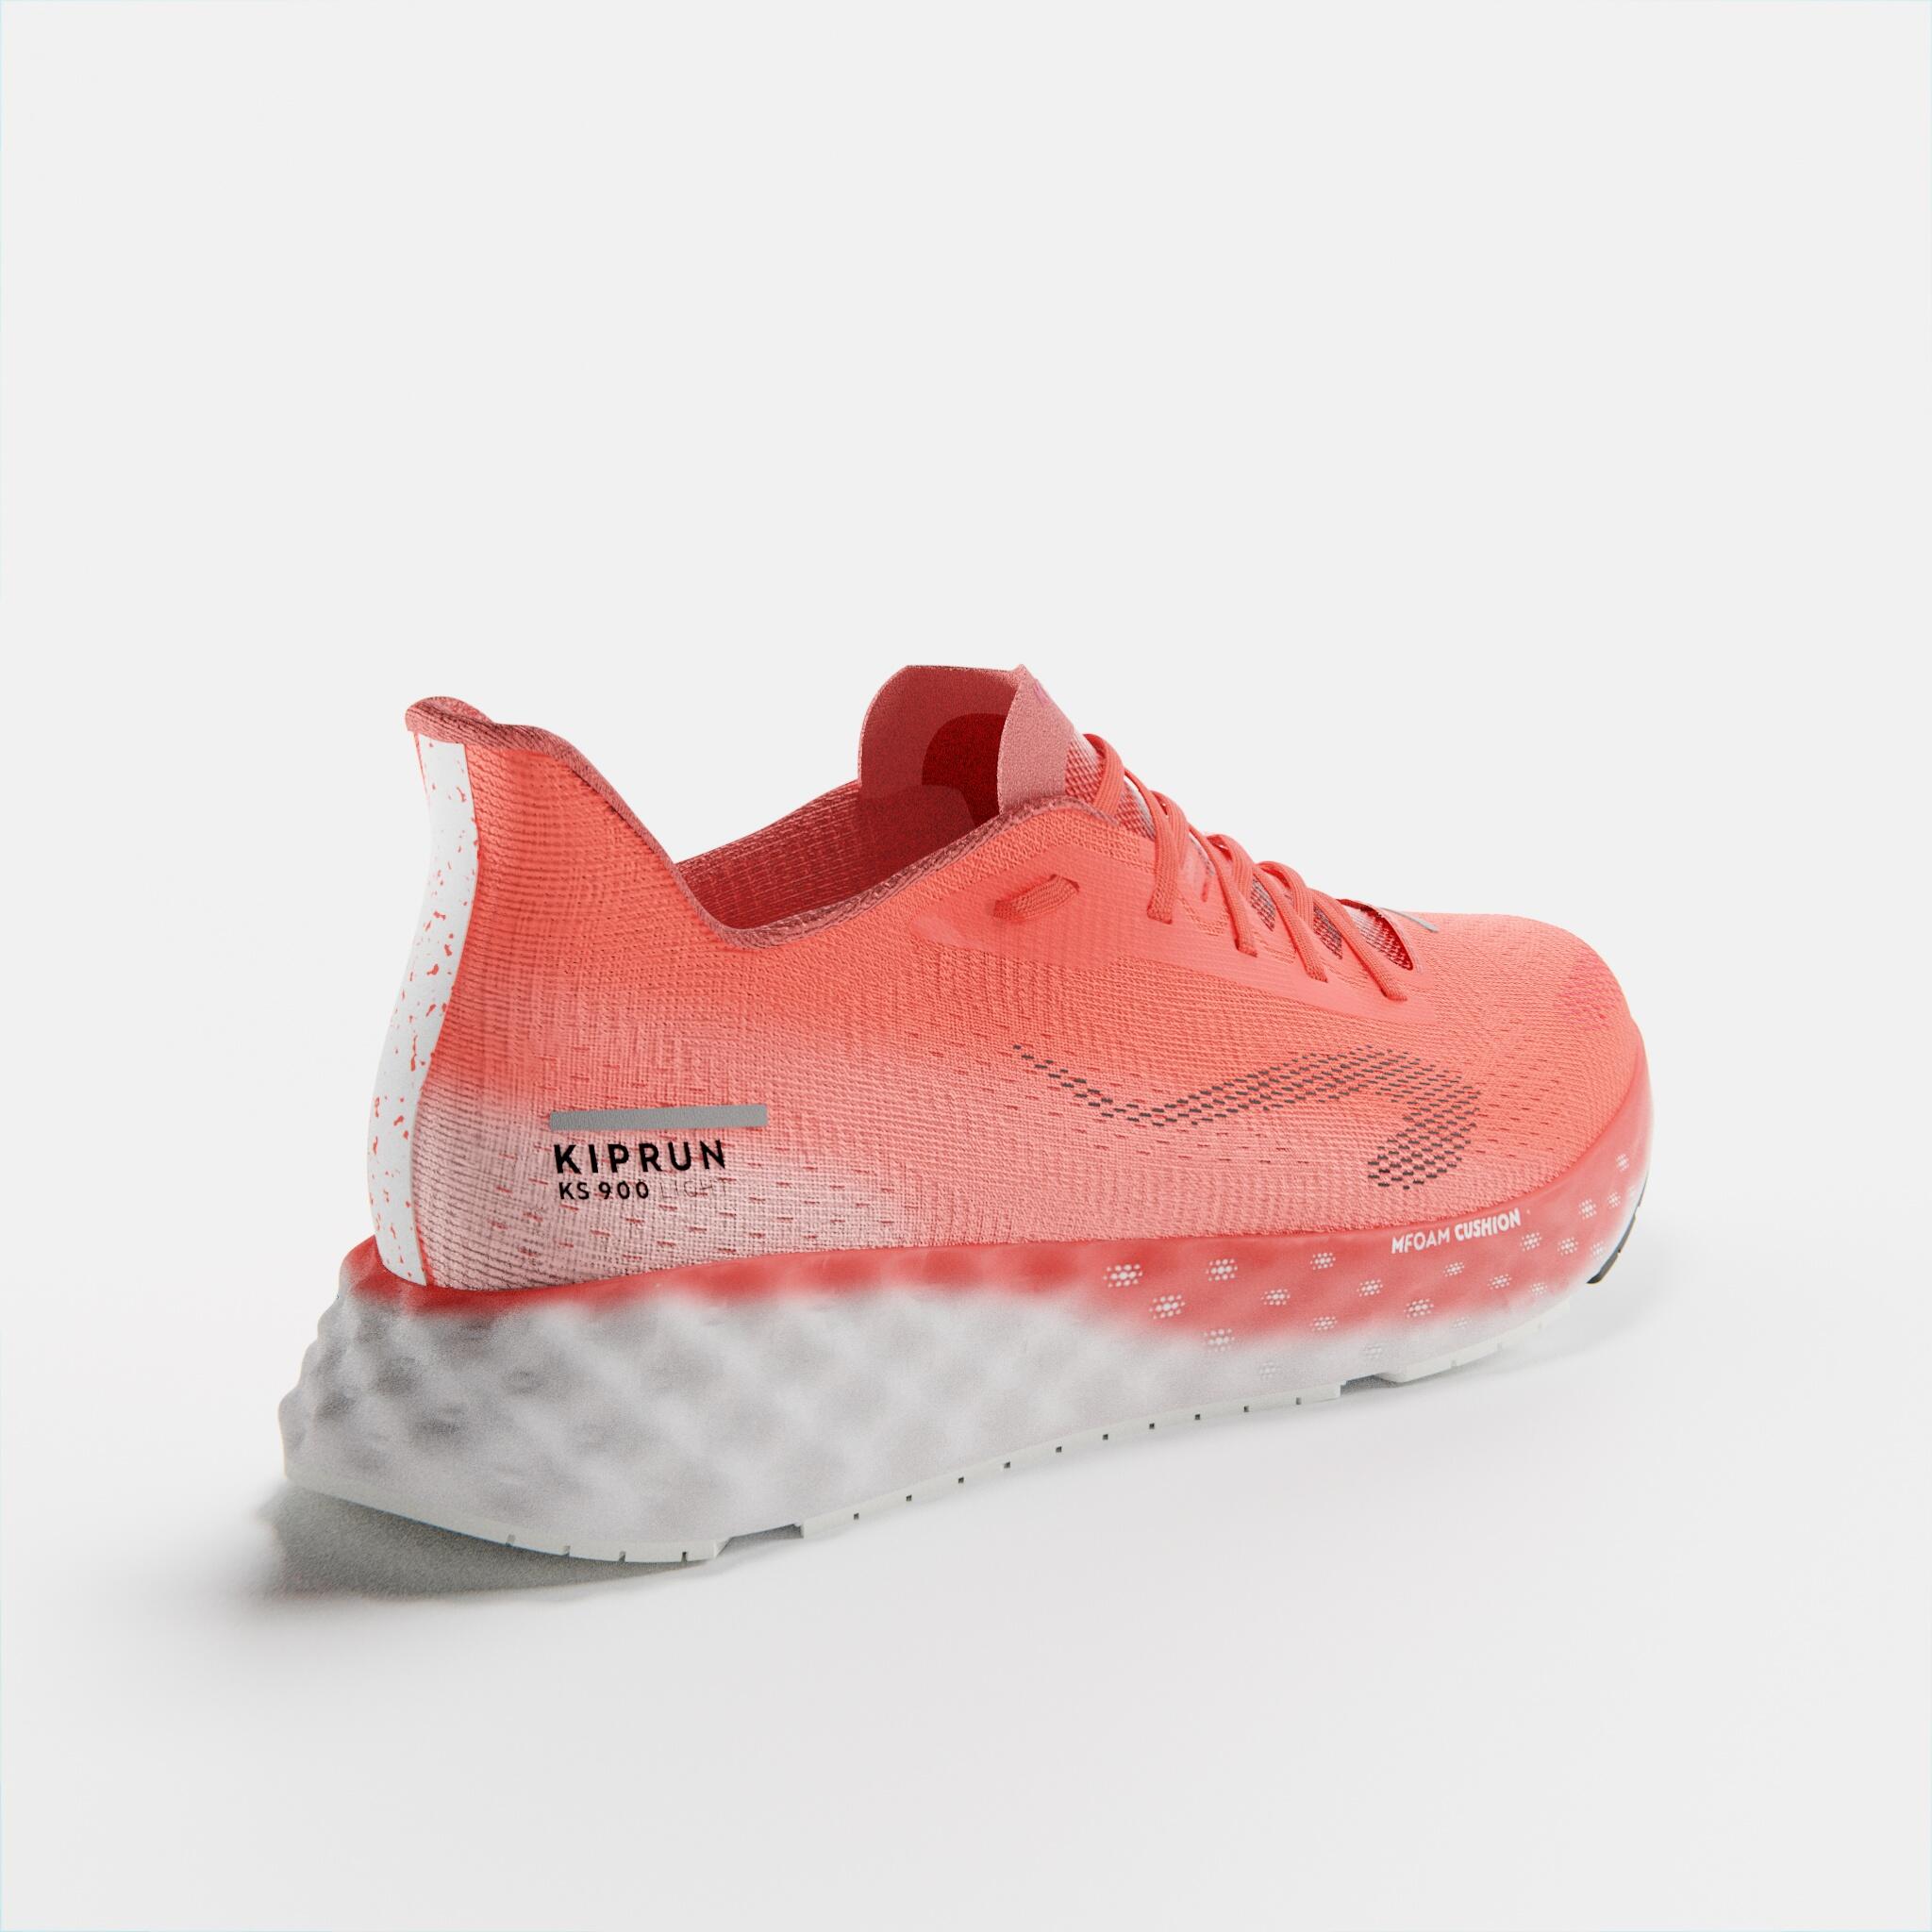  KIPRUN KS900 Women's Running Shoes - Light coral 10/12